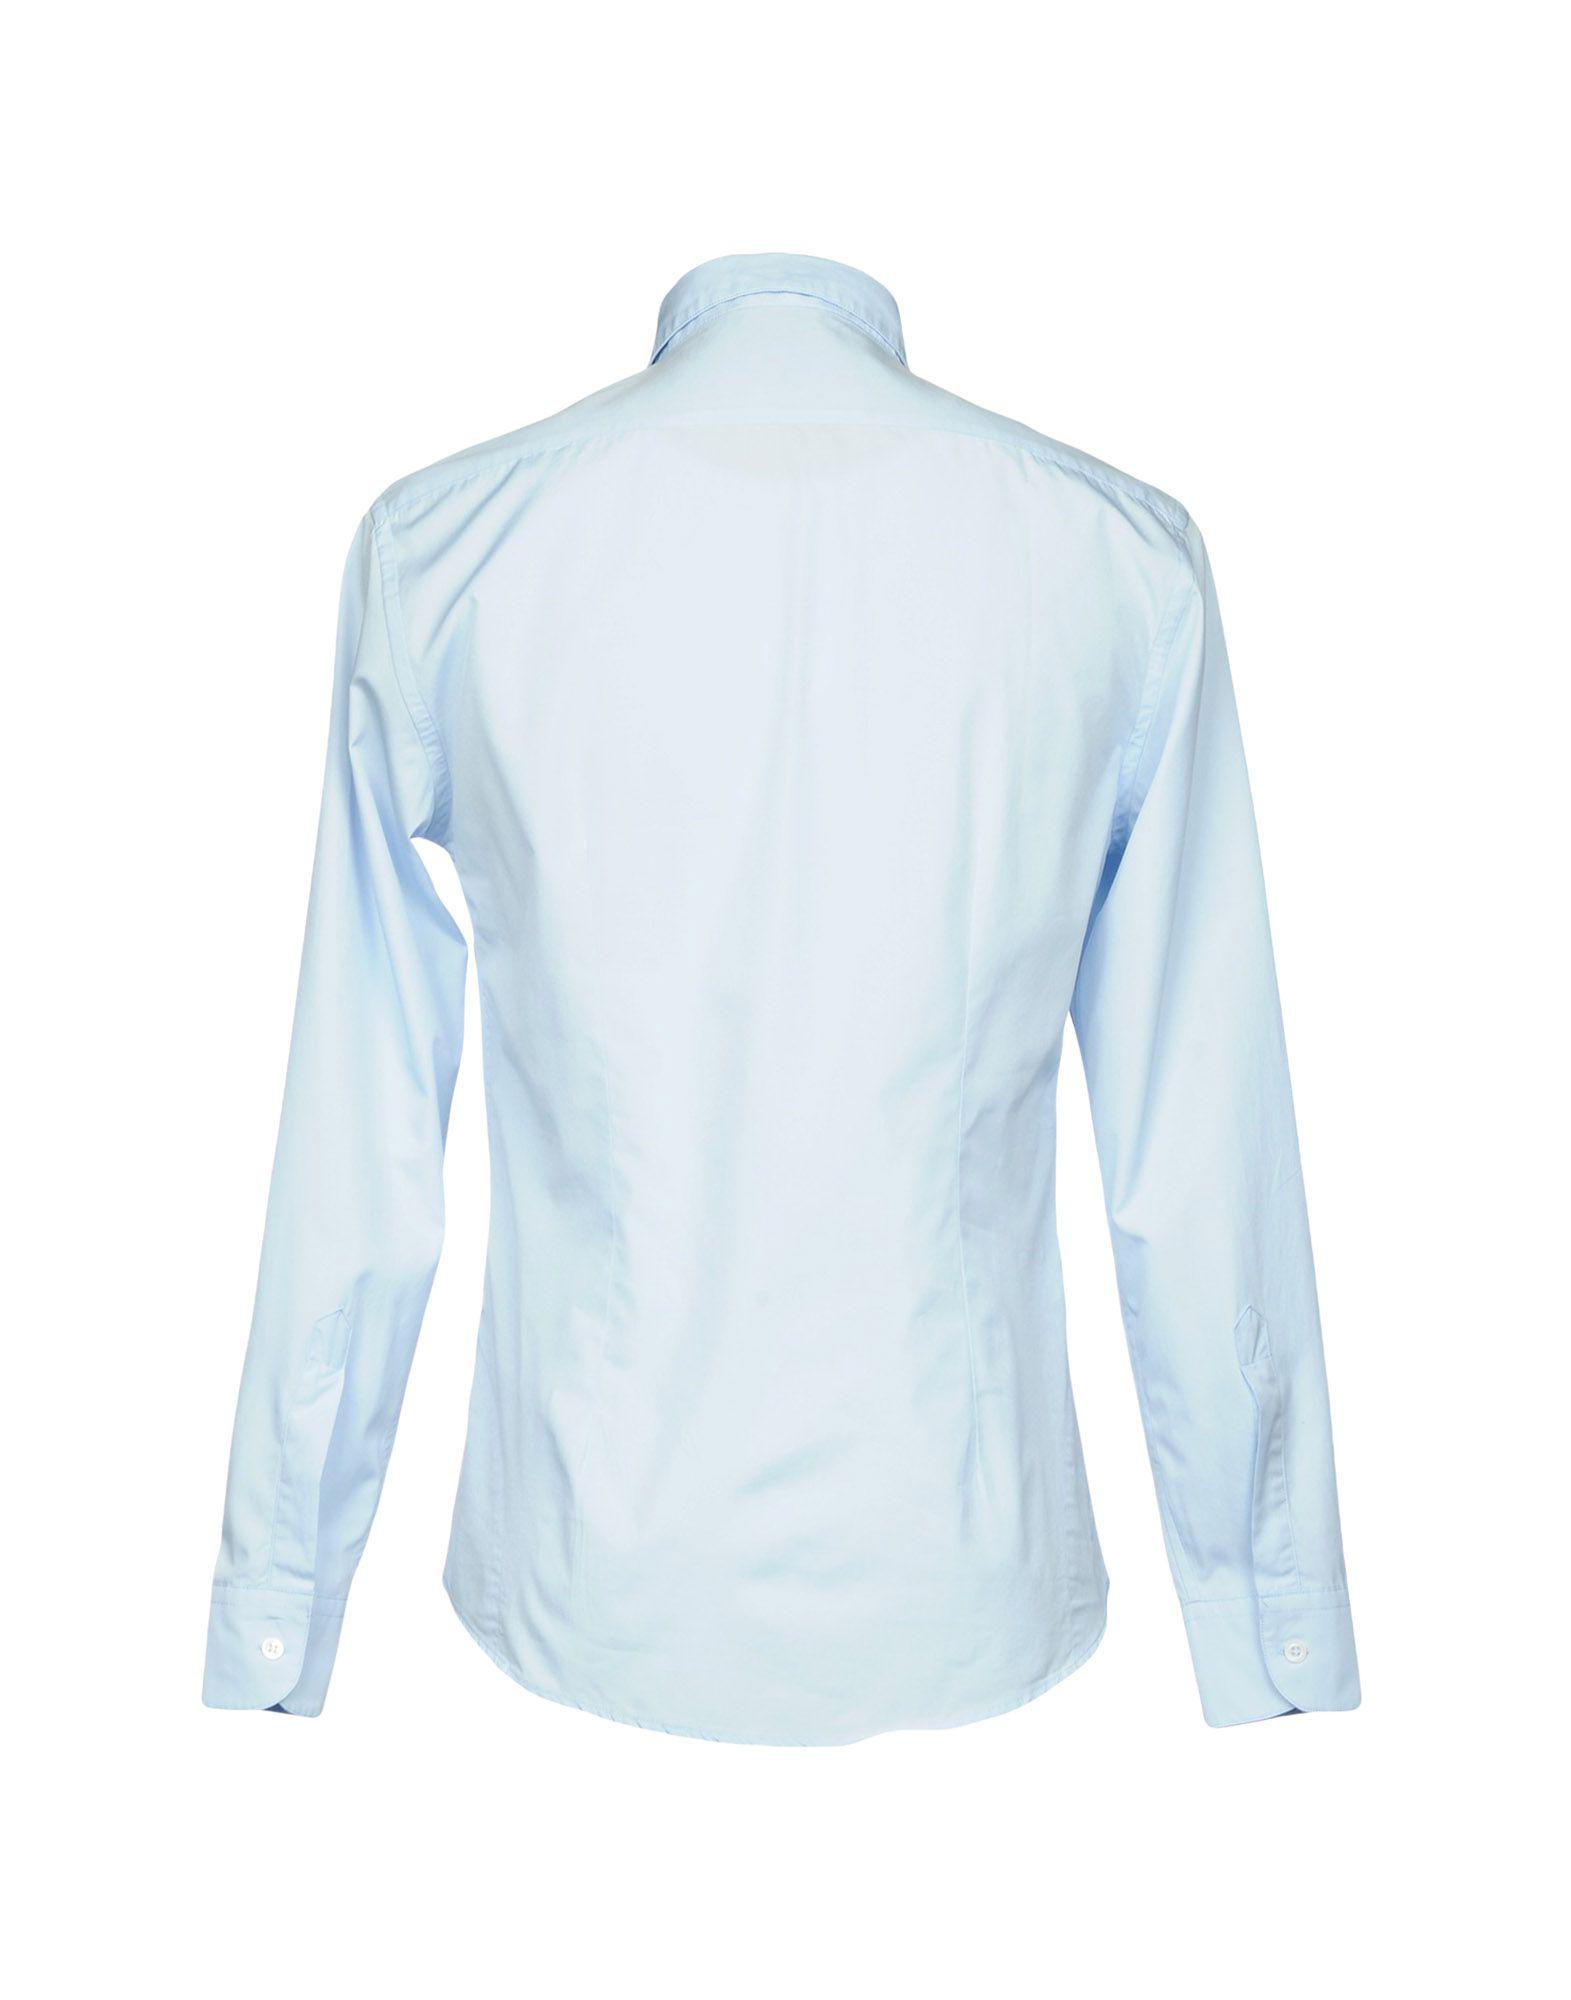 Barena Cotton Shirt in Sky Blue (Blue) for Men - Lyst